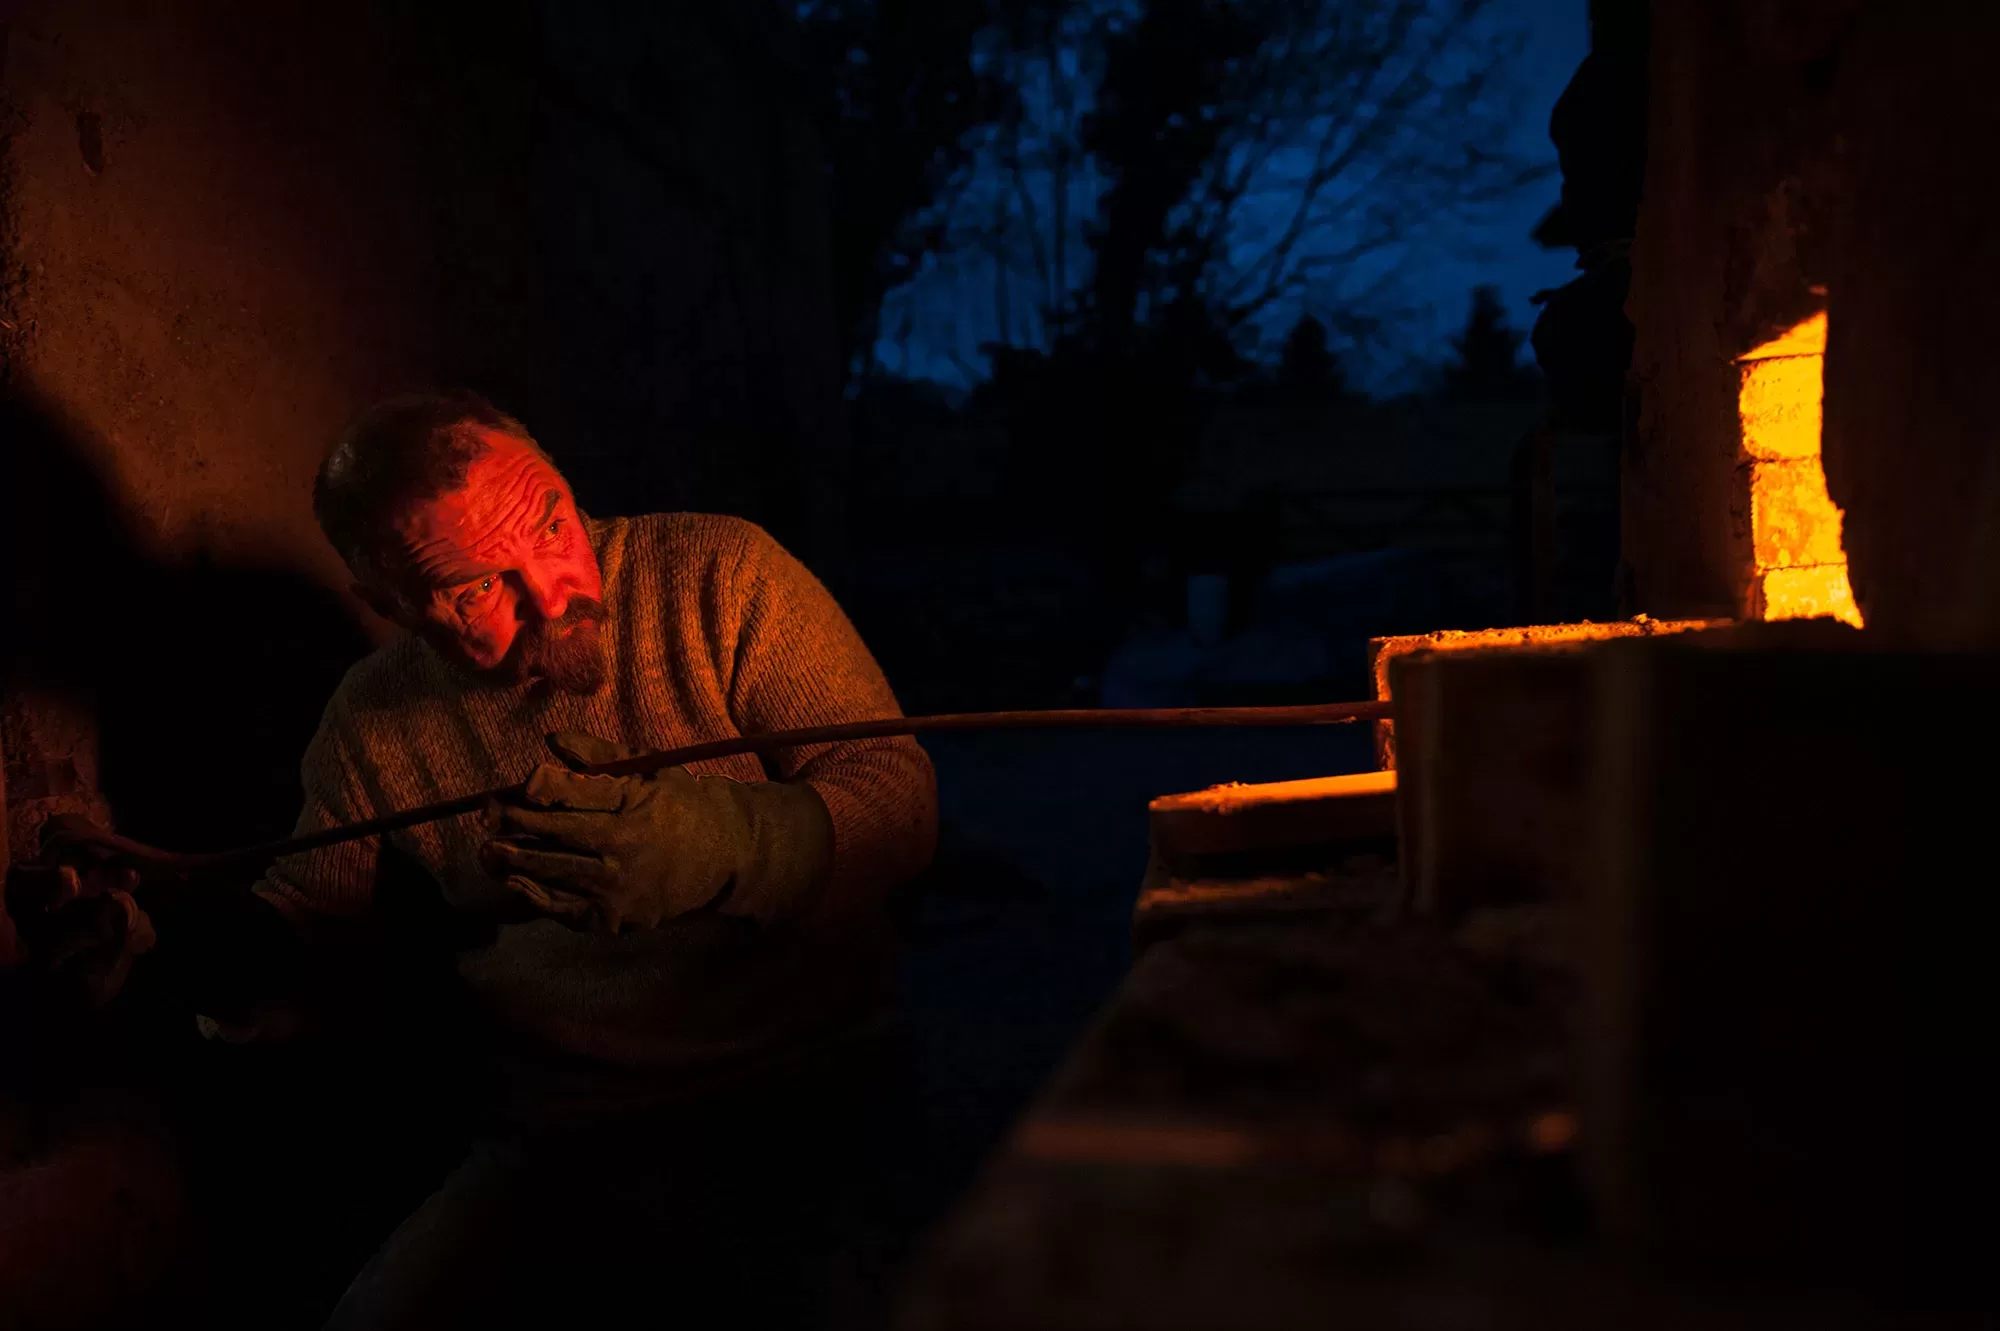 Potter Nic Collins firing his wood kiln